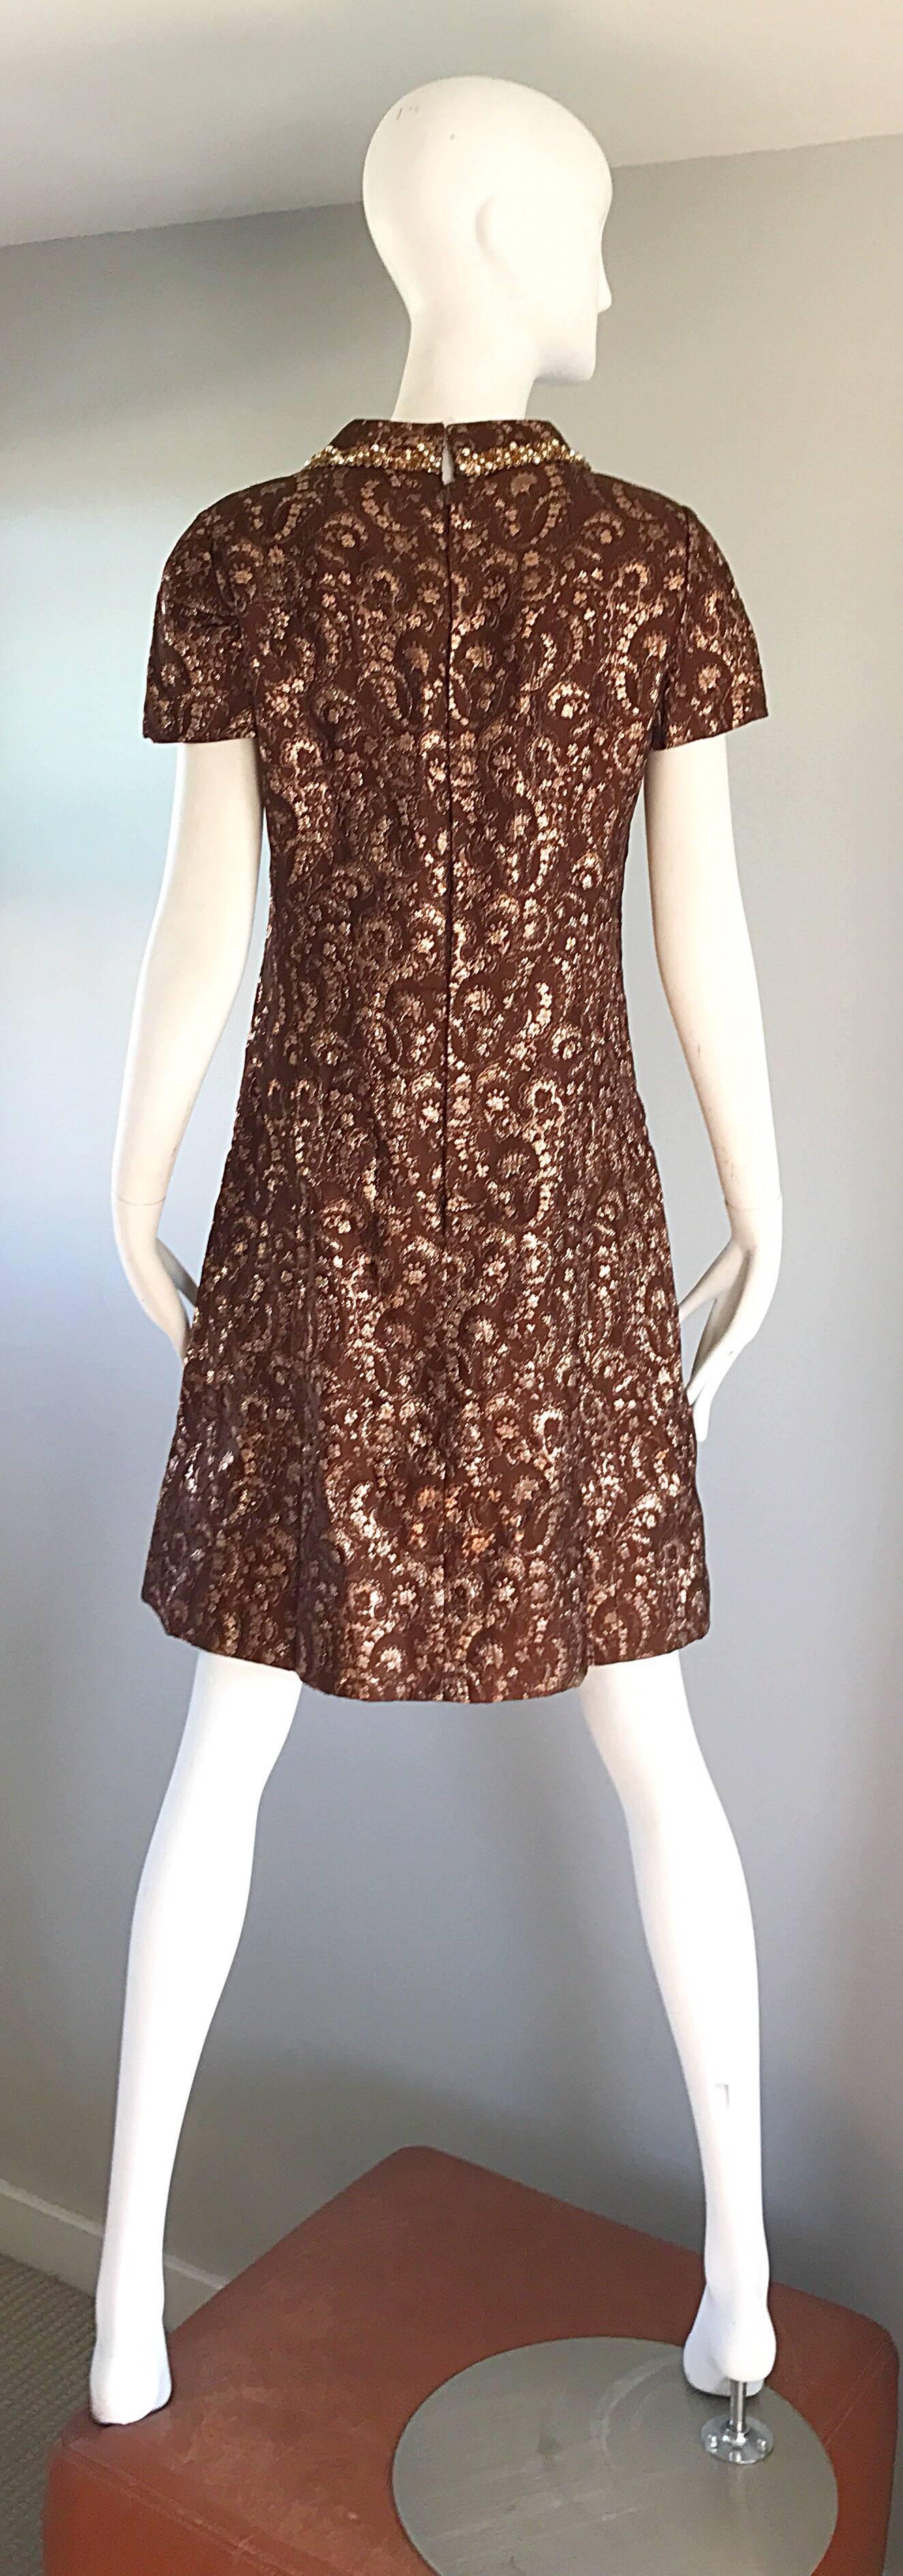 brown brocade dress